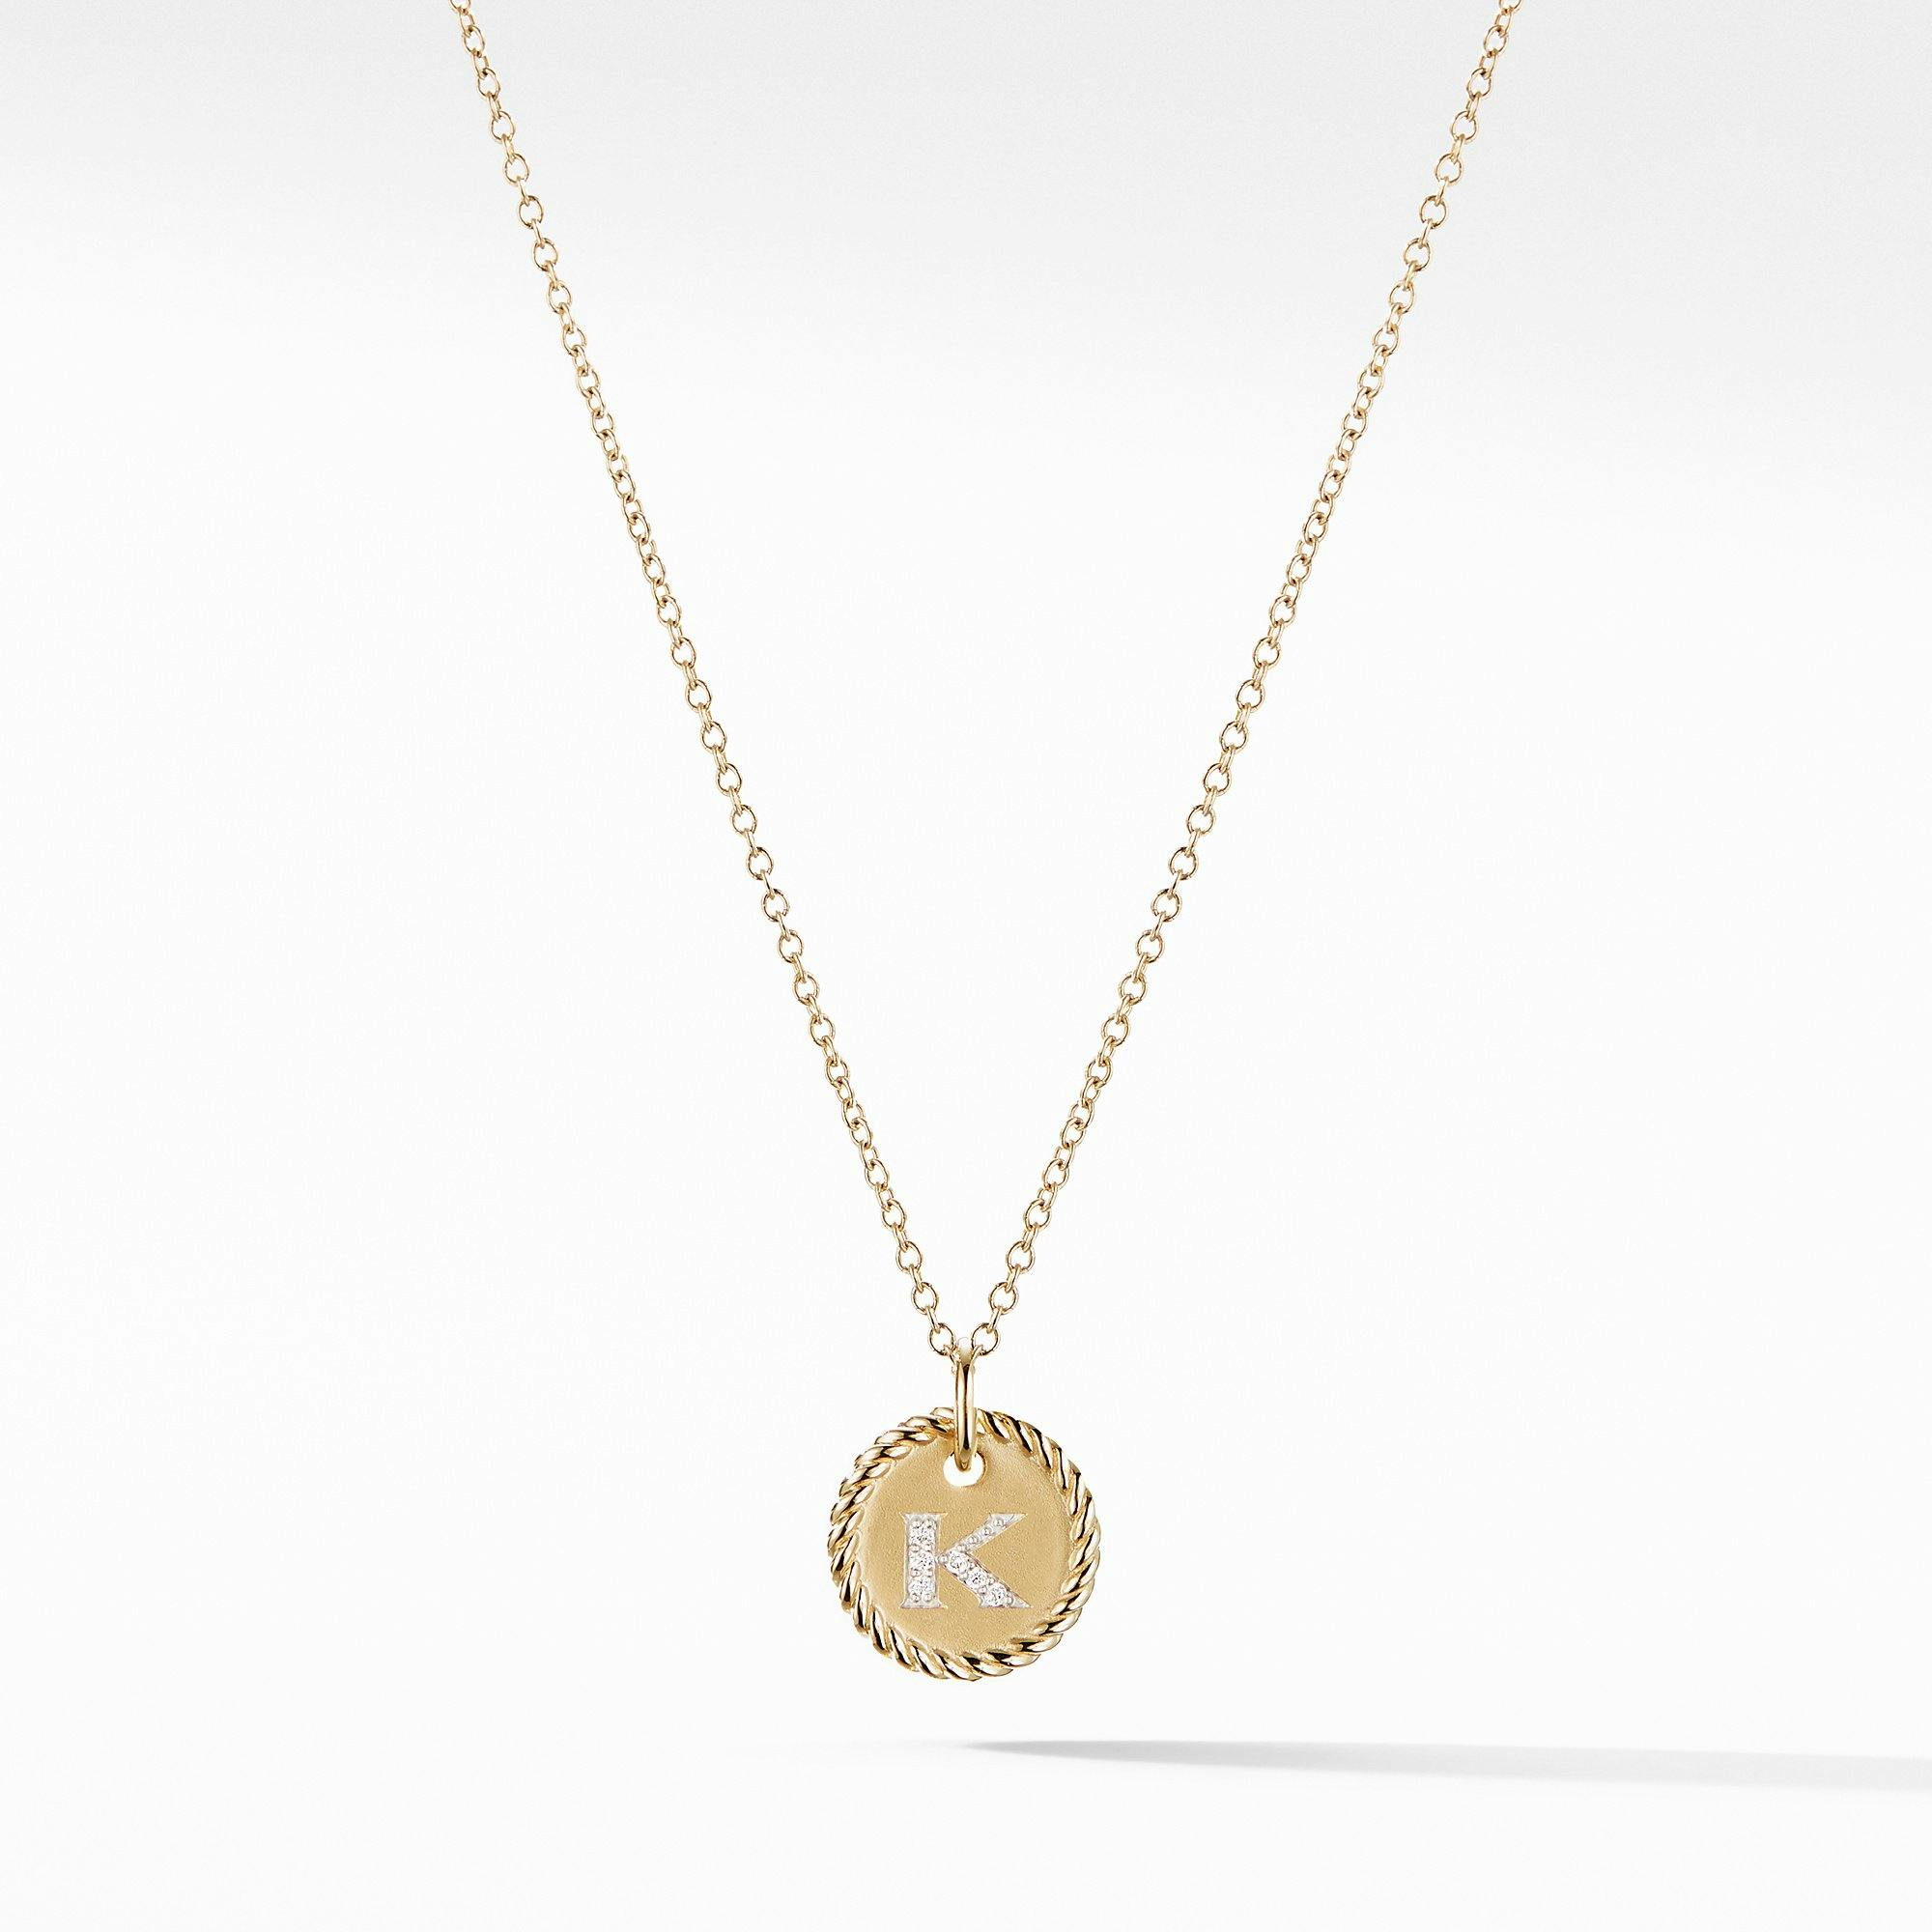 David Yurman "K" Initial Charm Necklace in 18k Yellow Gold with Diamonds